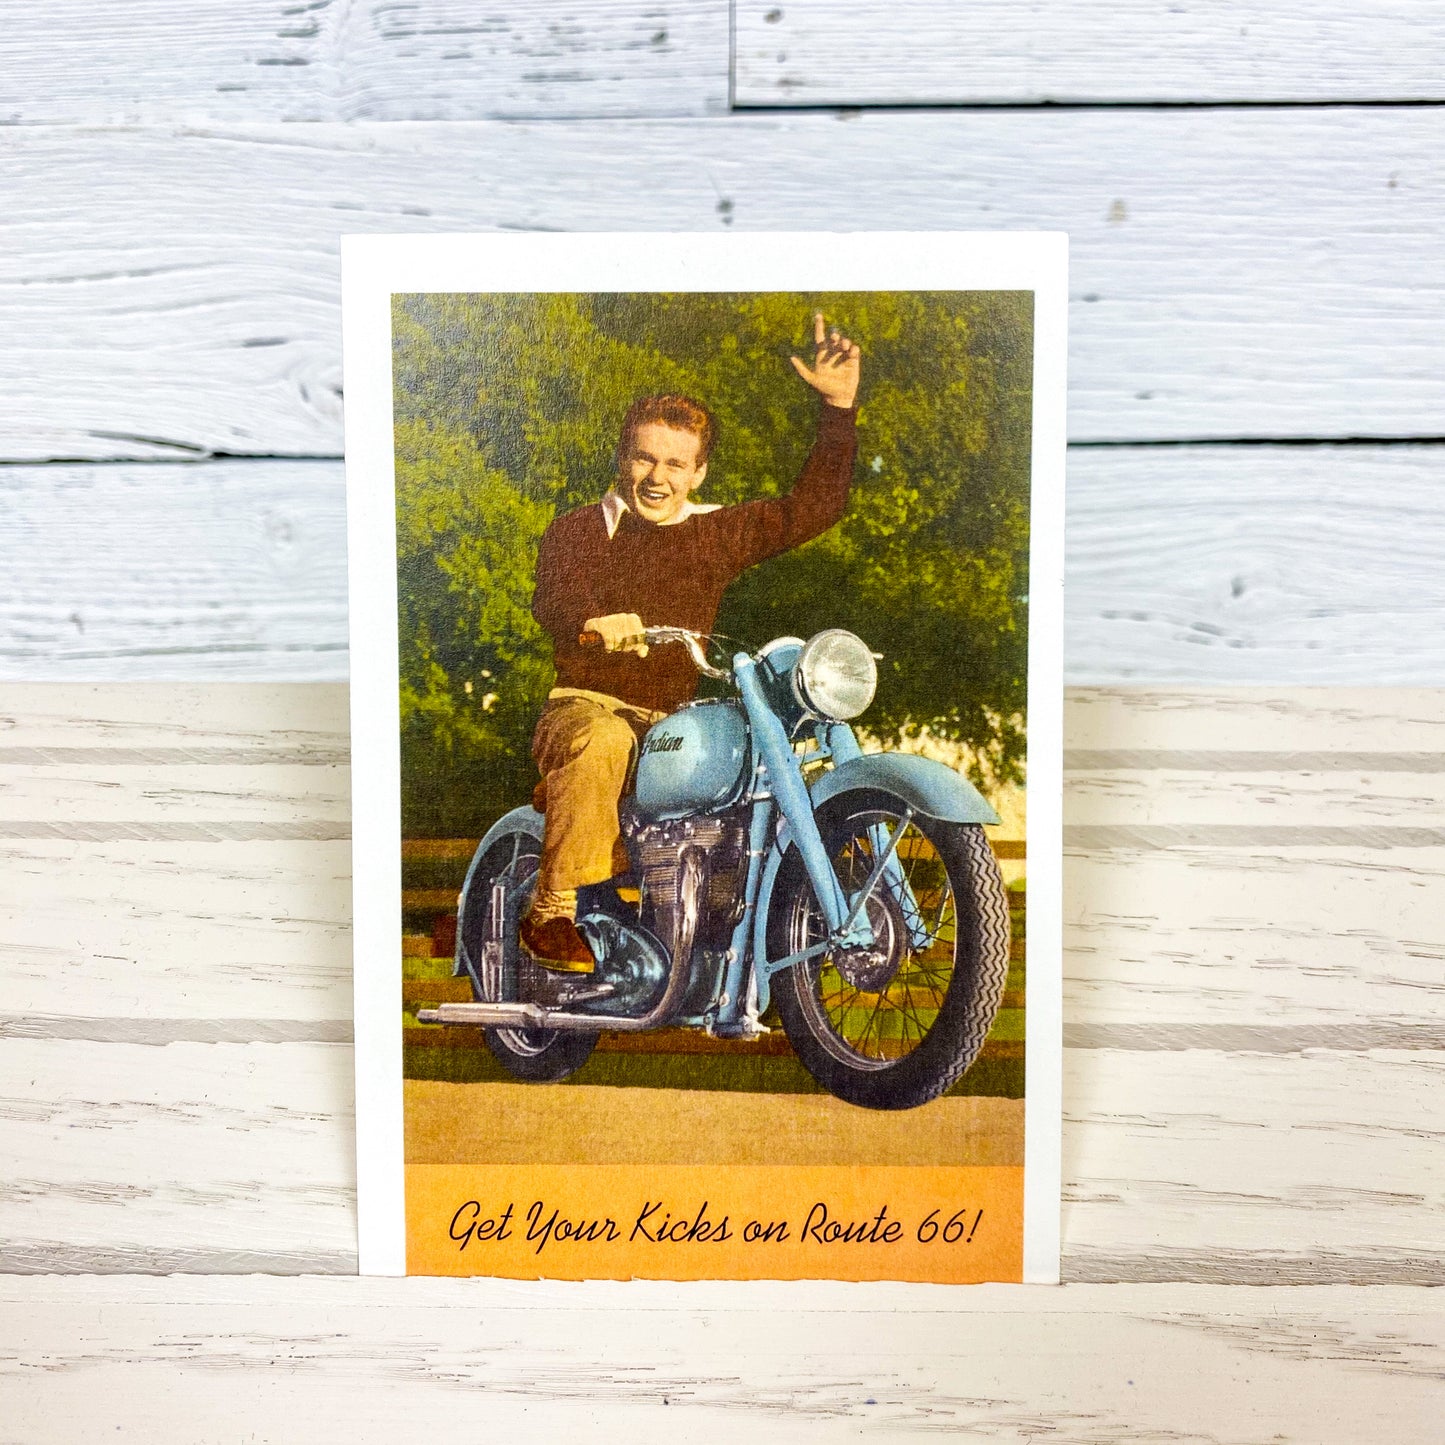 Found Image Press Kicks on Route 66 Motorcycle Postcard